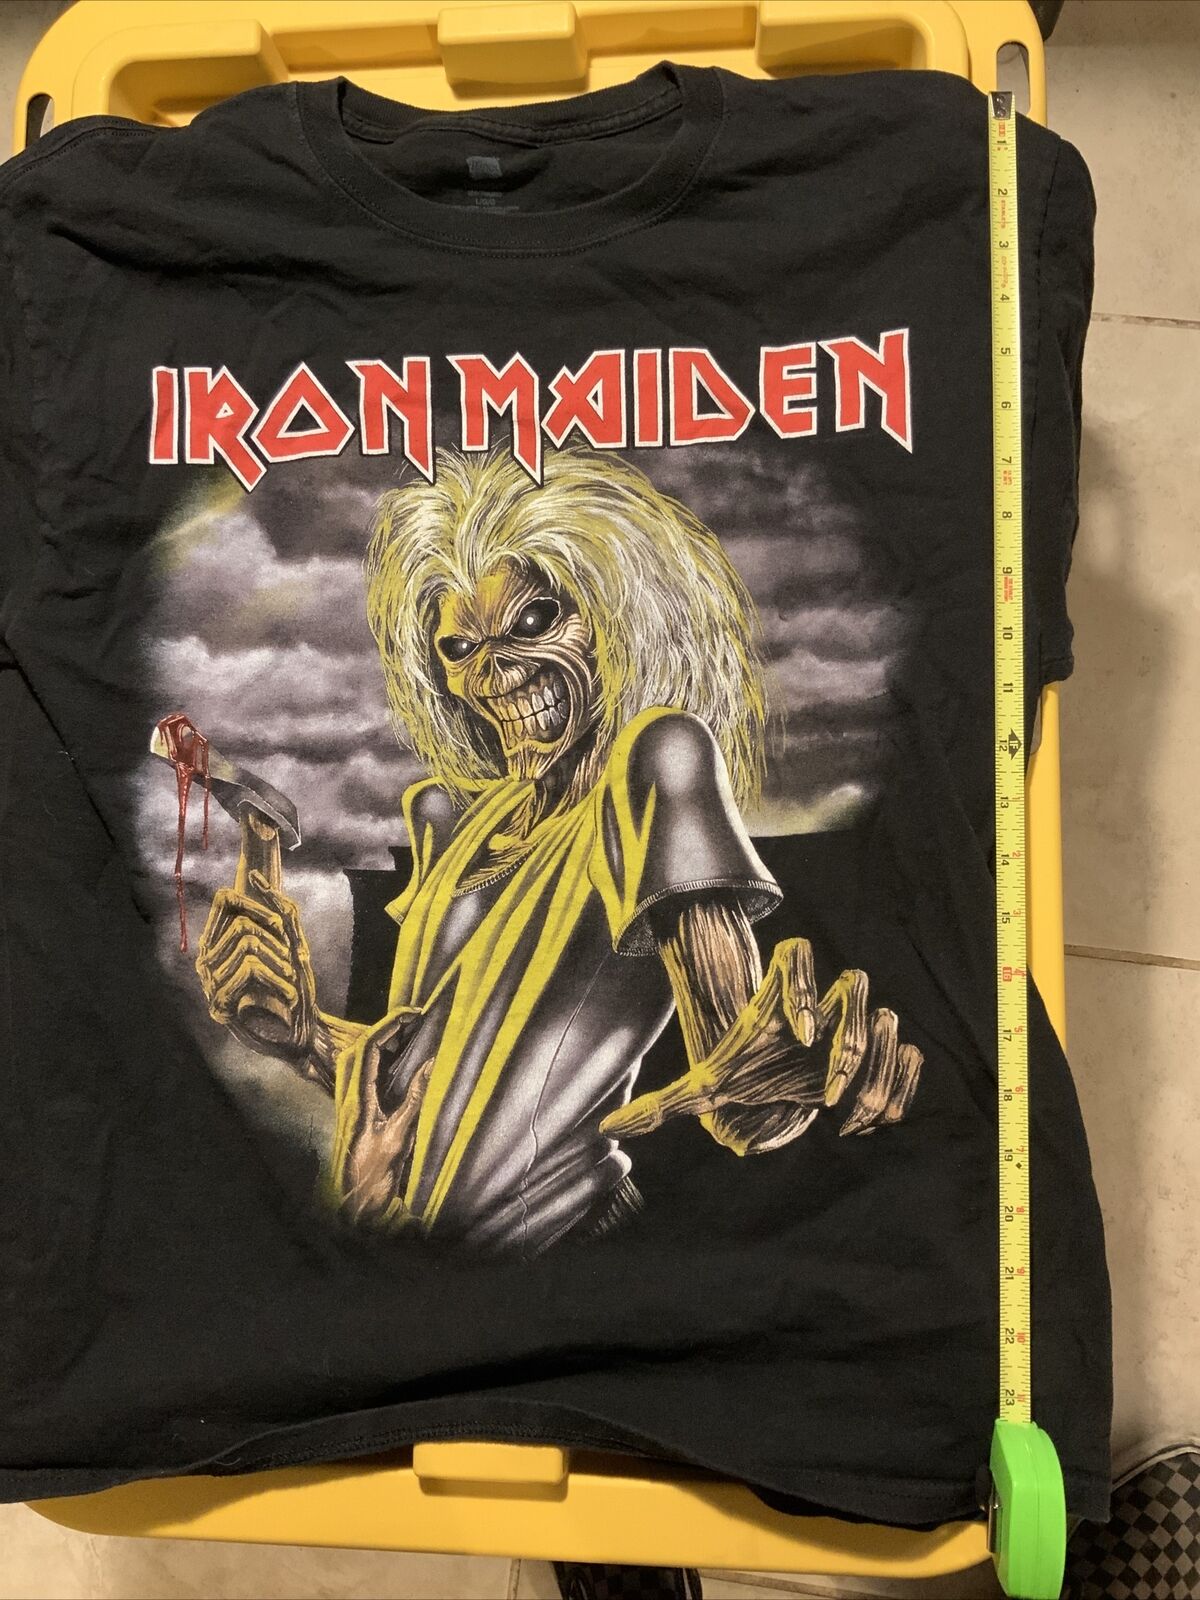 Iron Maiden Killers t-shirt 2-sided mens sz large - image 2